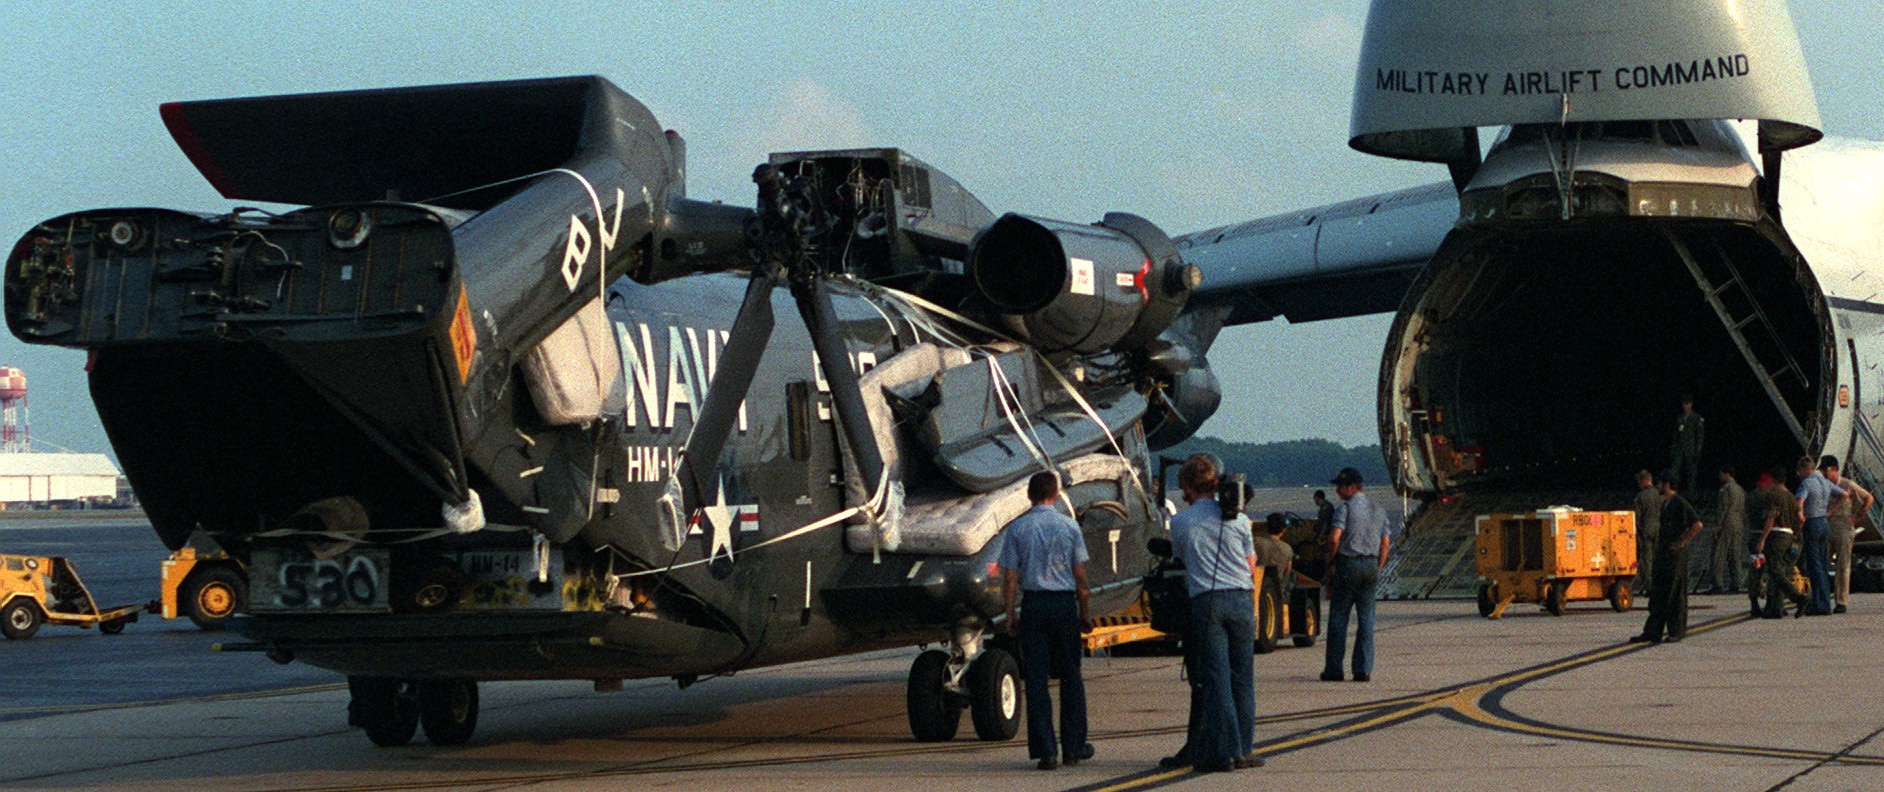 hm-14 vanguard helicopter mine countermeasures squadron navy rh-53d sea stallion 85